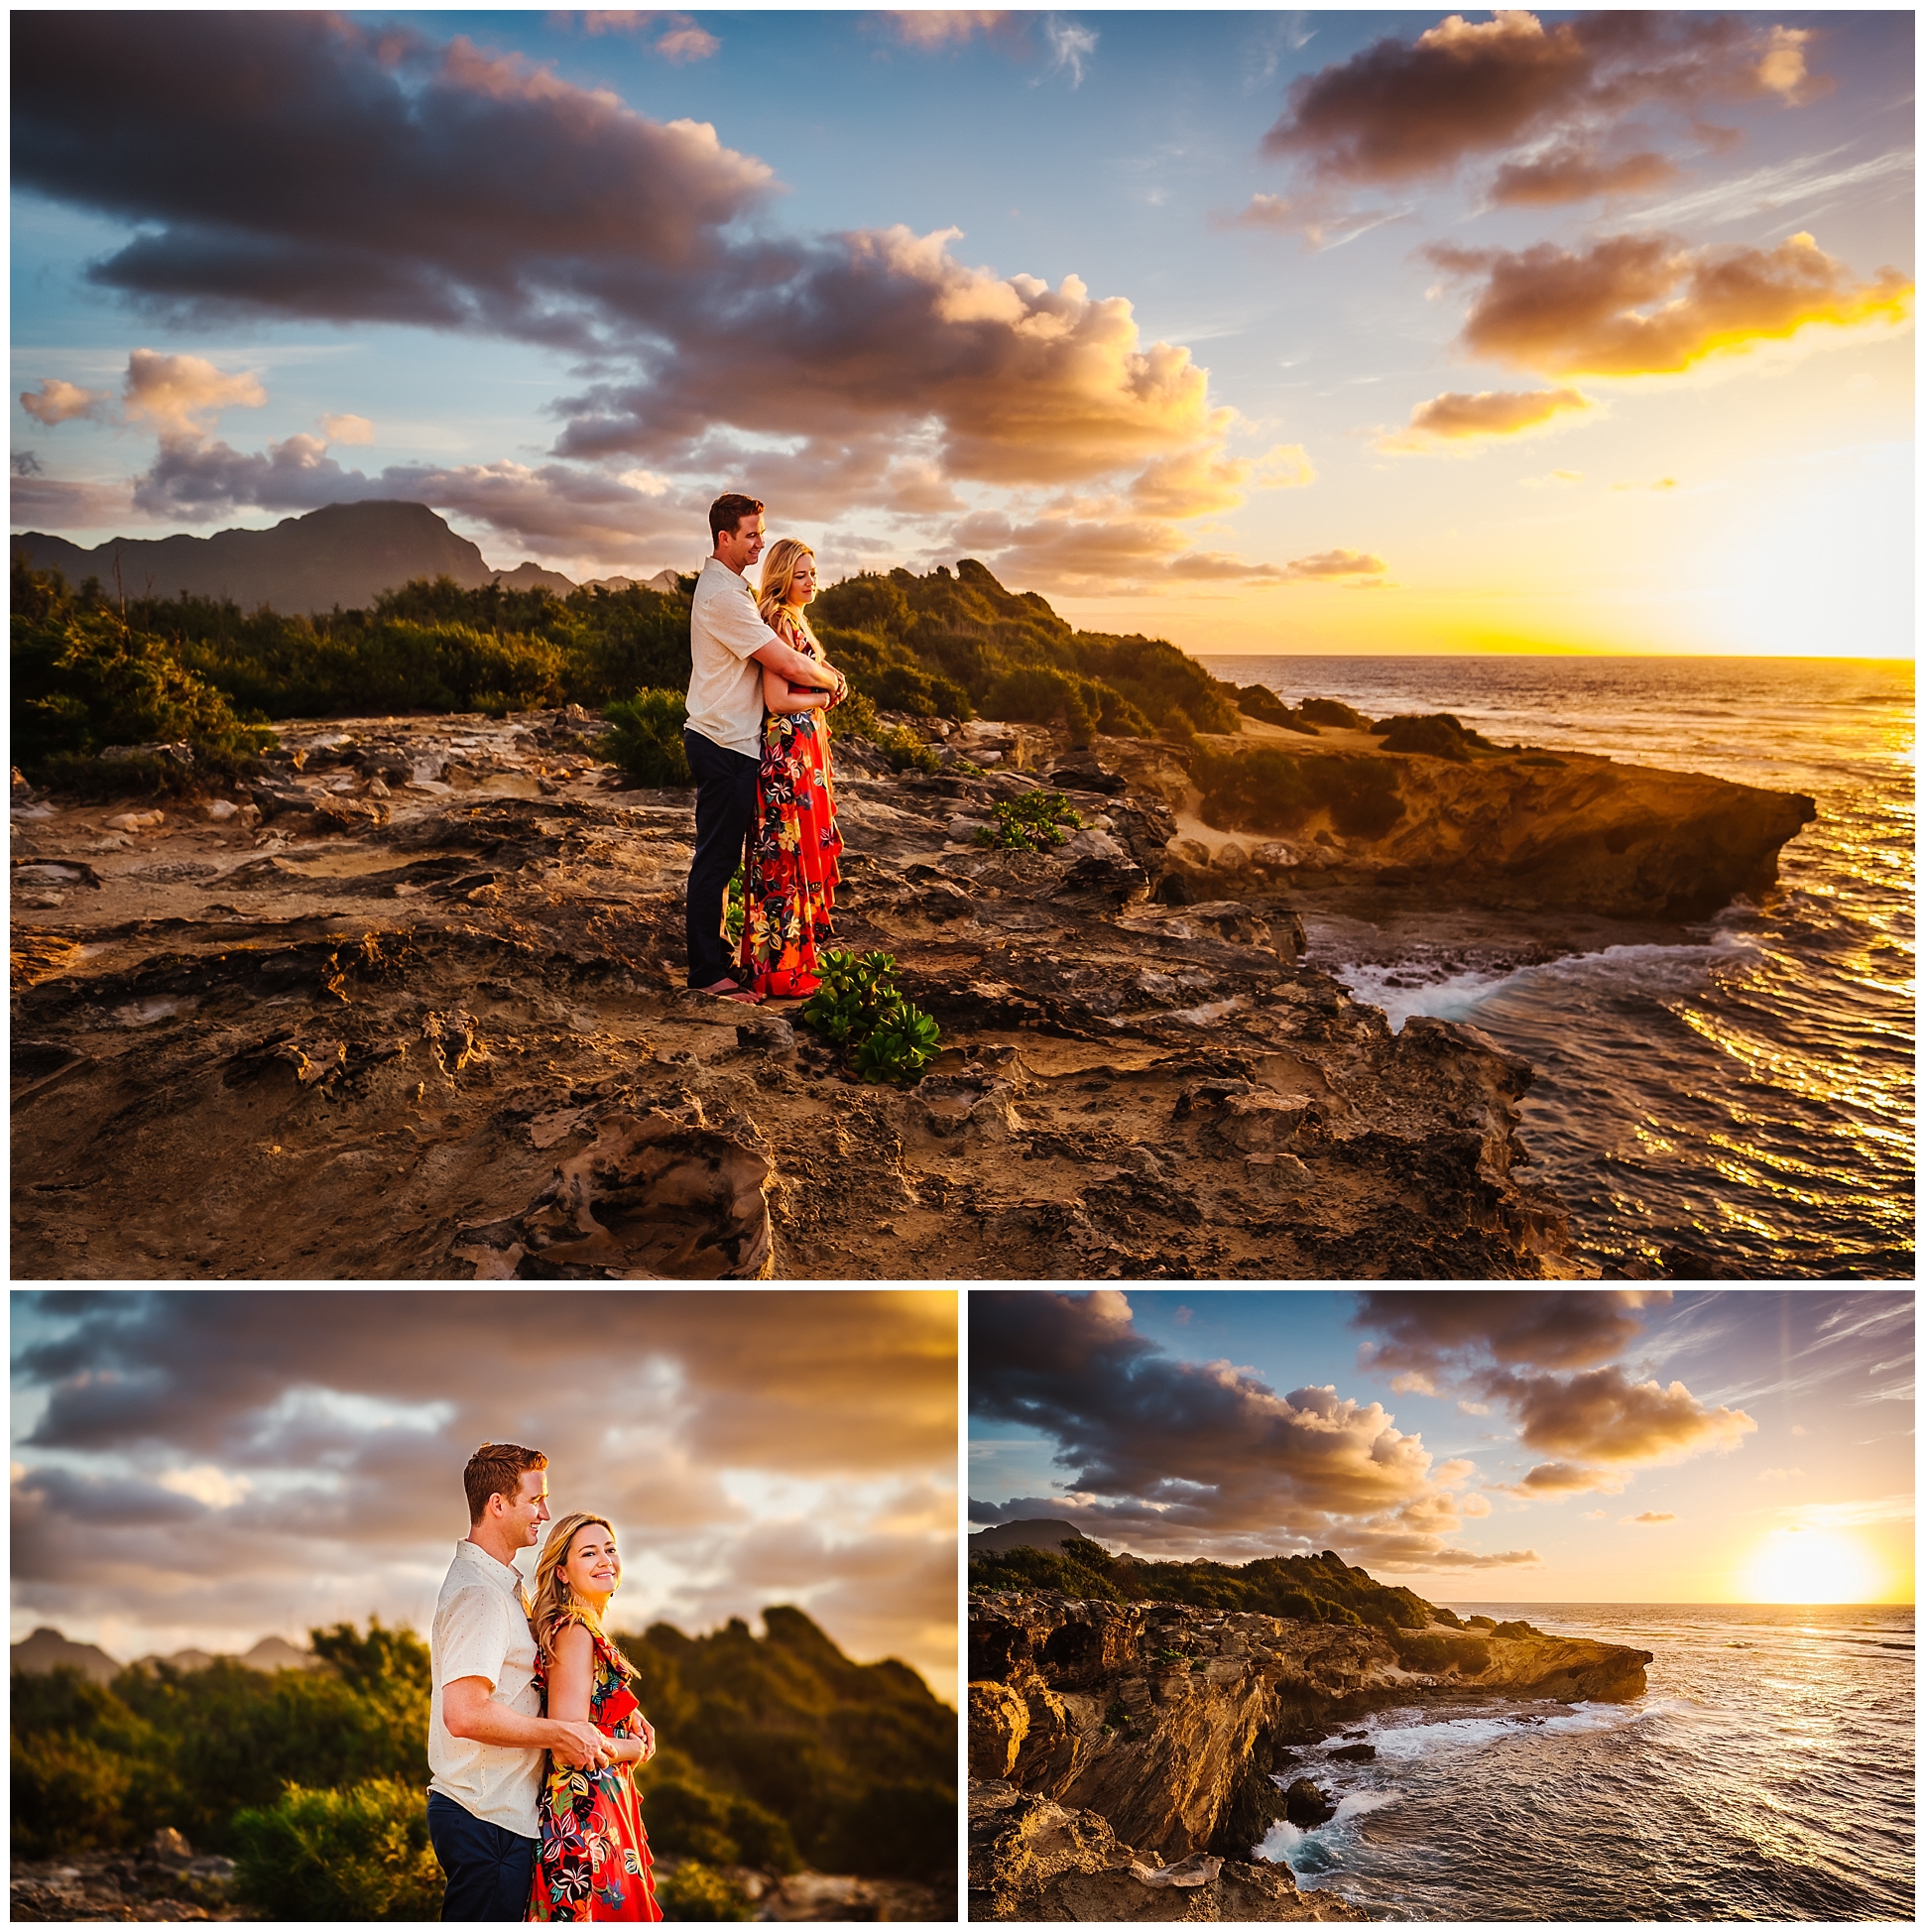 hawaiin-honeymoon-sunrise-portraits-kauai-grand-hystt-destination-photographer_0005.jpg